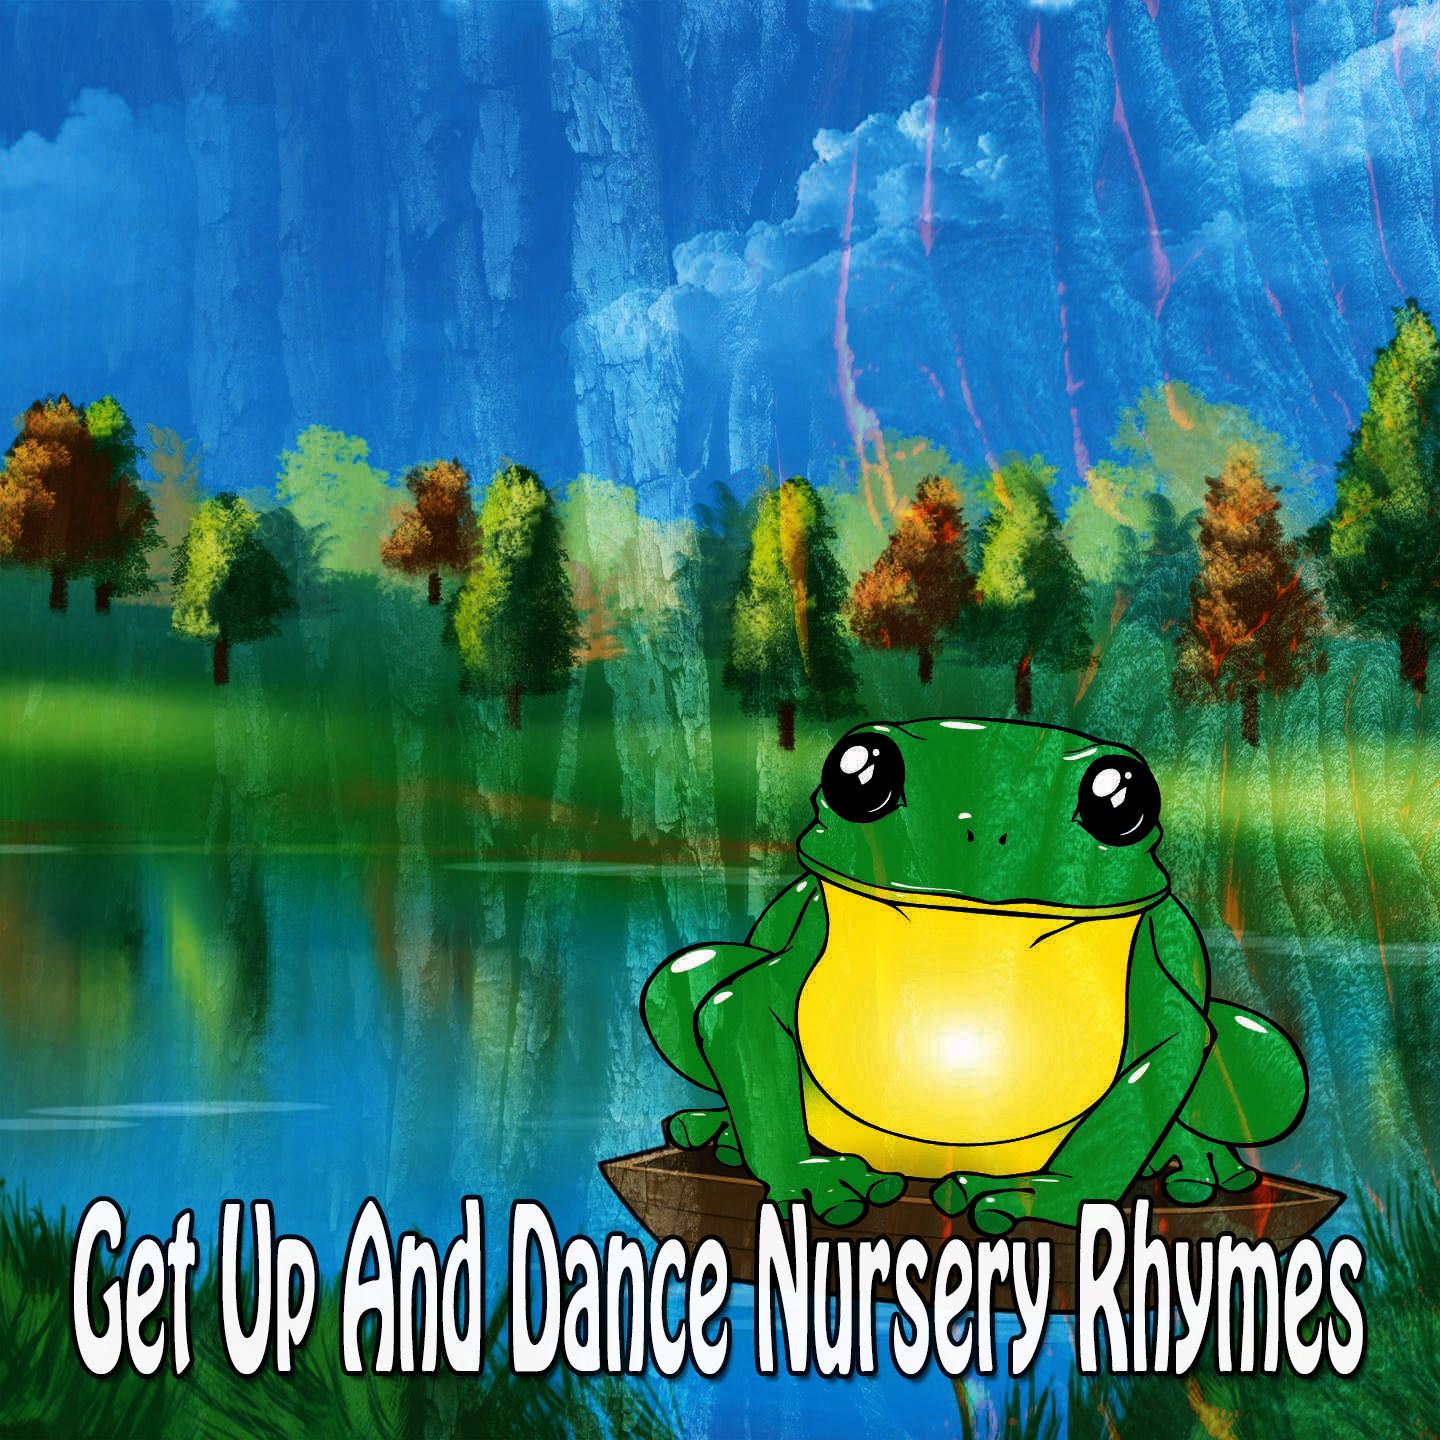 Get up and Dance Nursery Rhymes